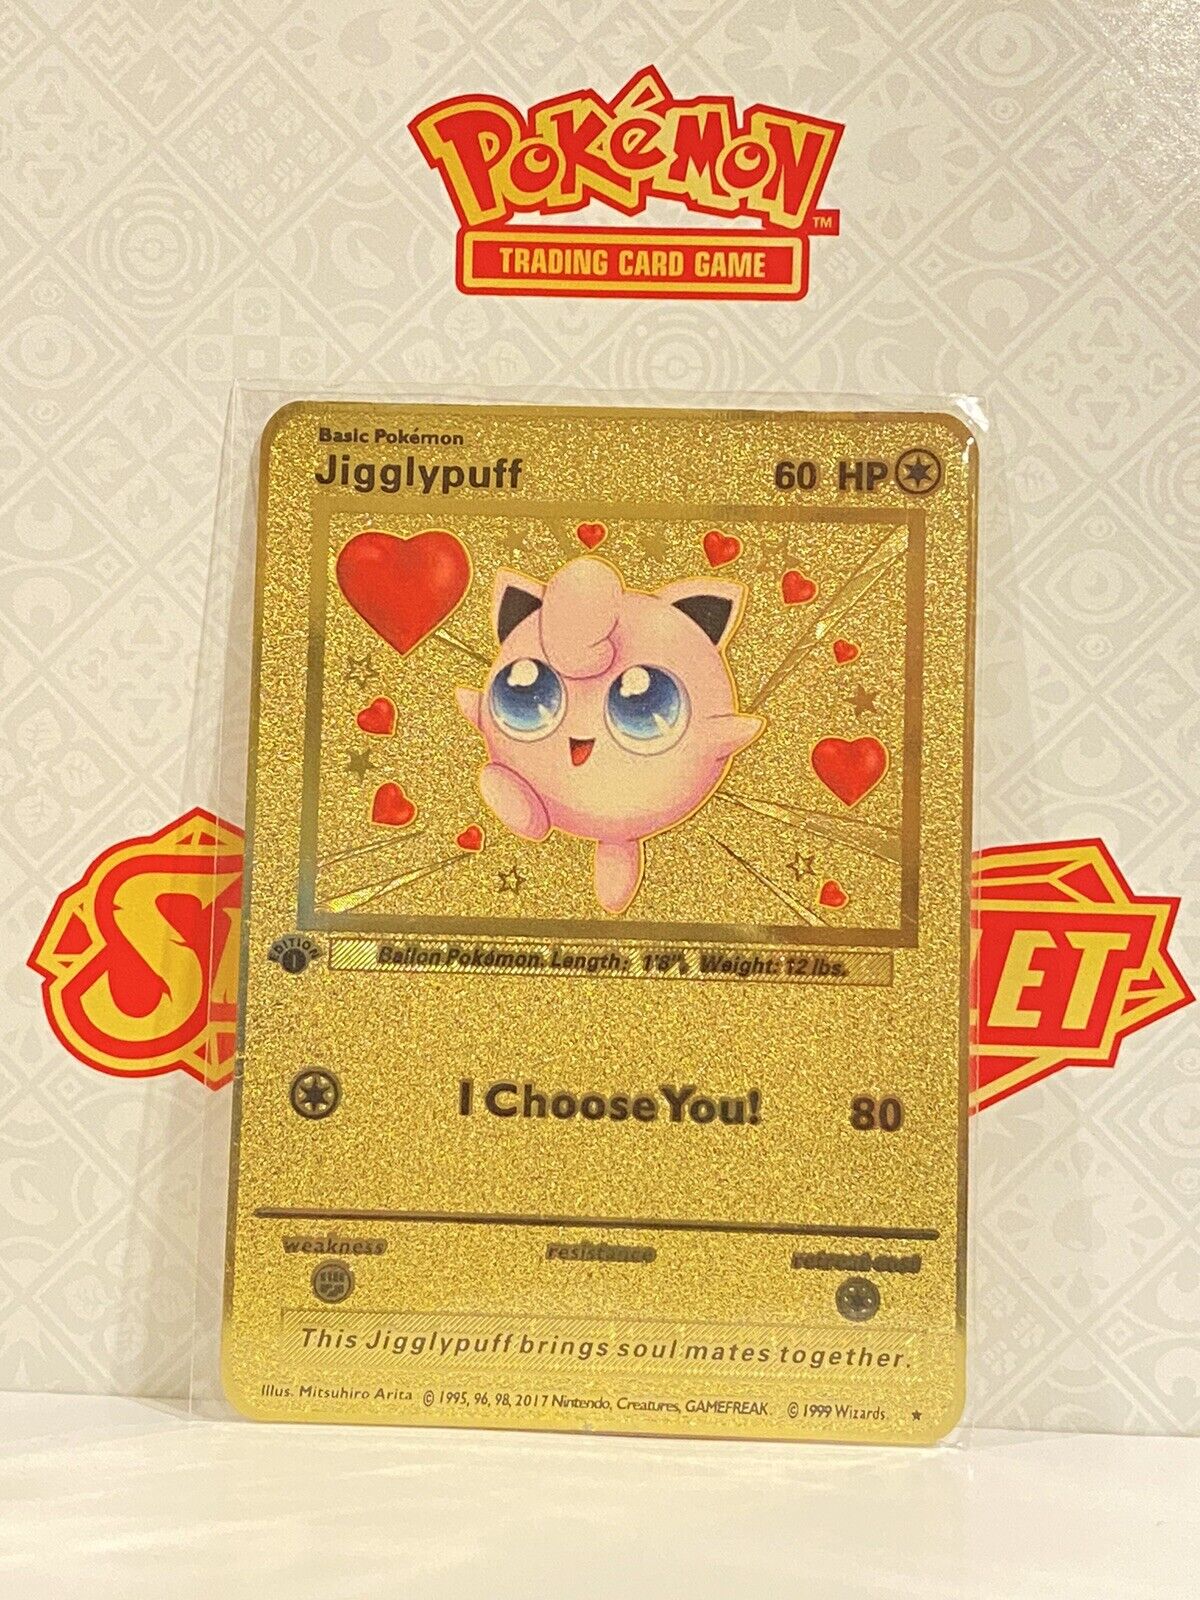 Jigglypuff I choose You Love Gold Metal Pokémon Card- Collectible/Gift/Display